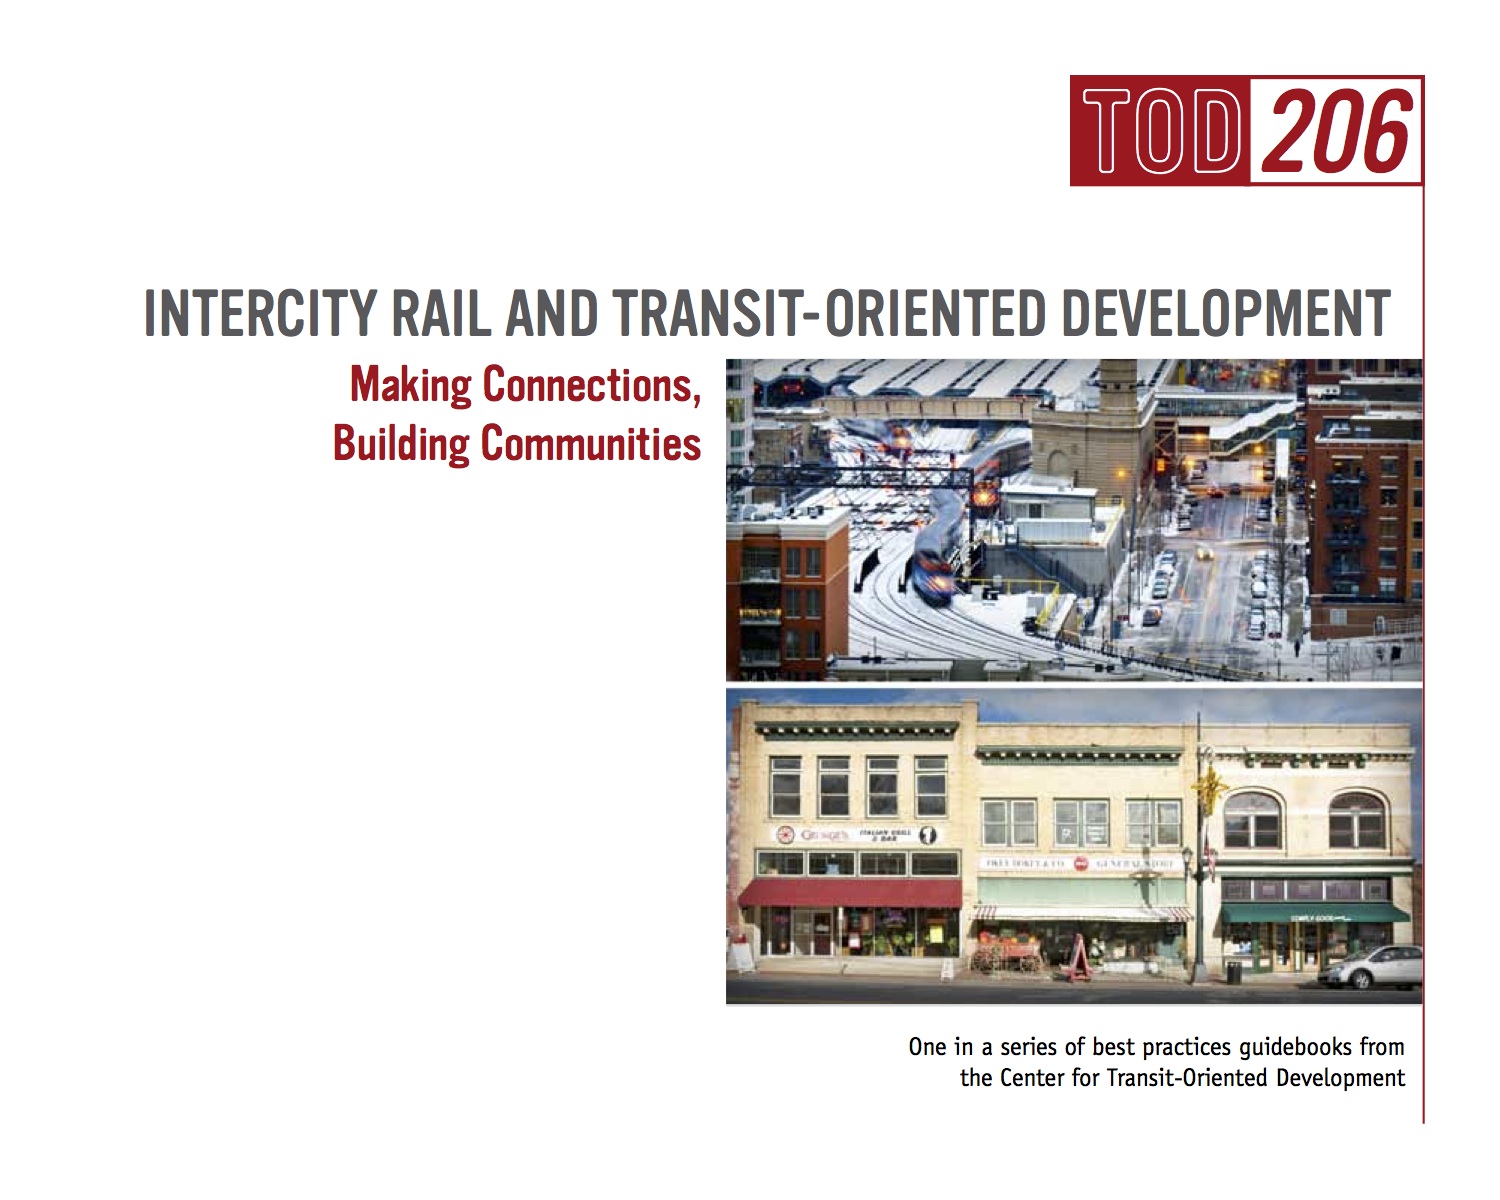 TOD 206: Intercity Rail and Transit-Oriented Development